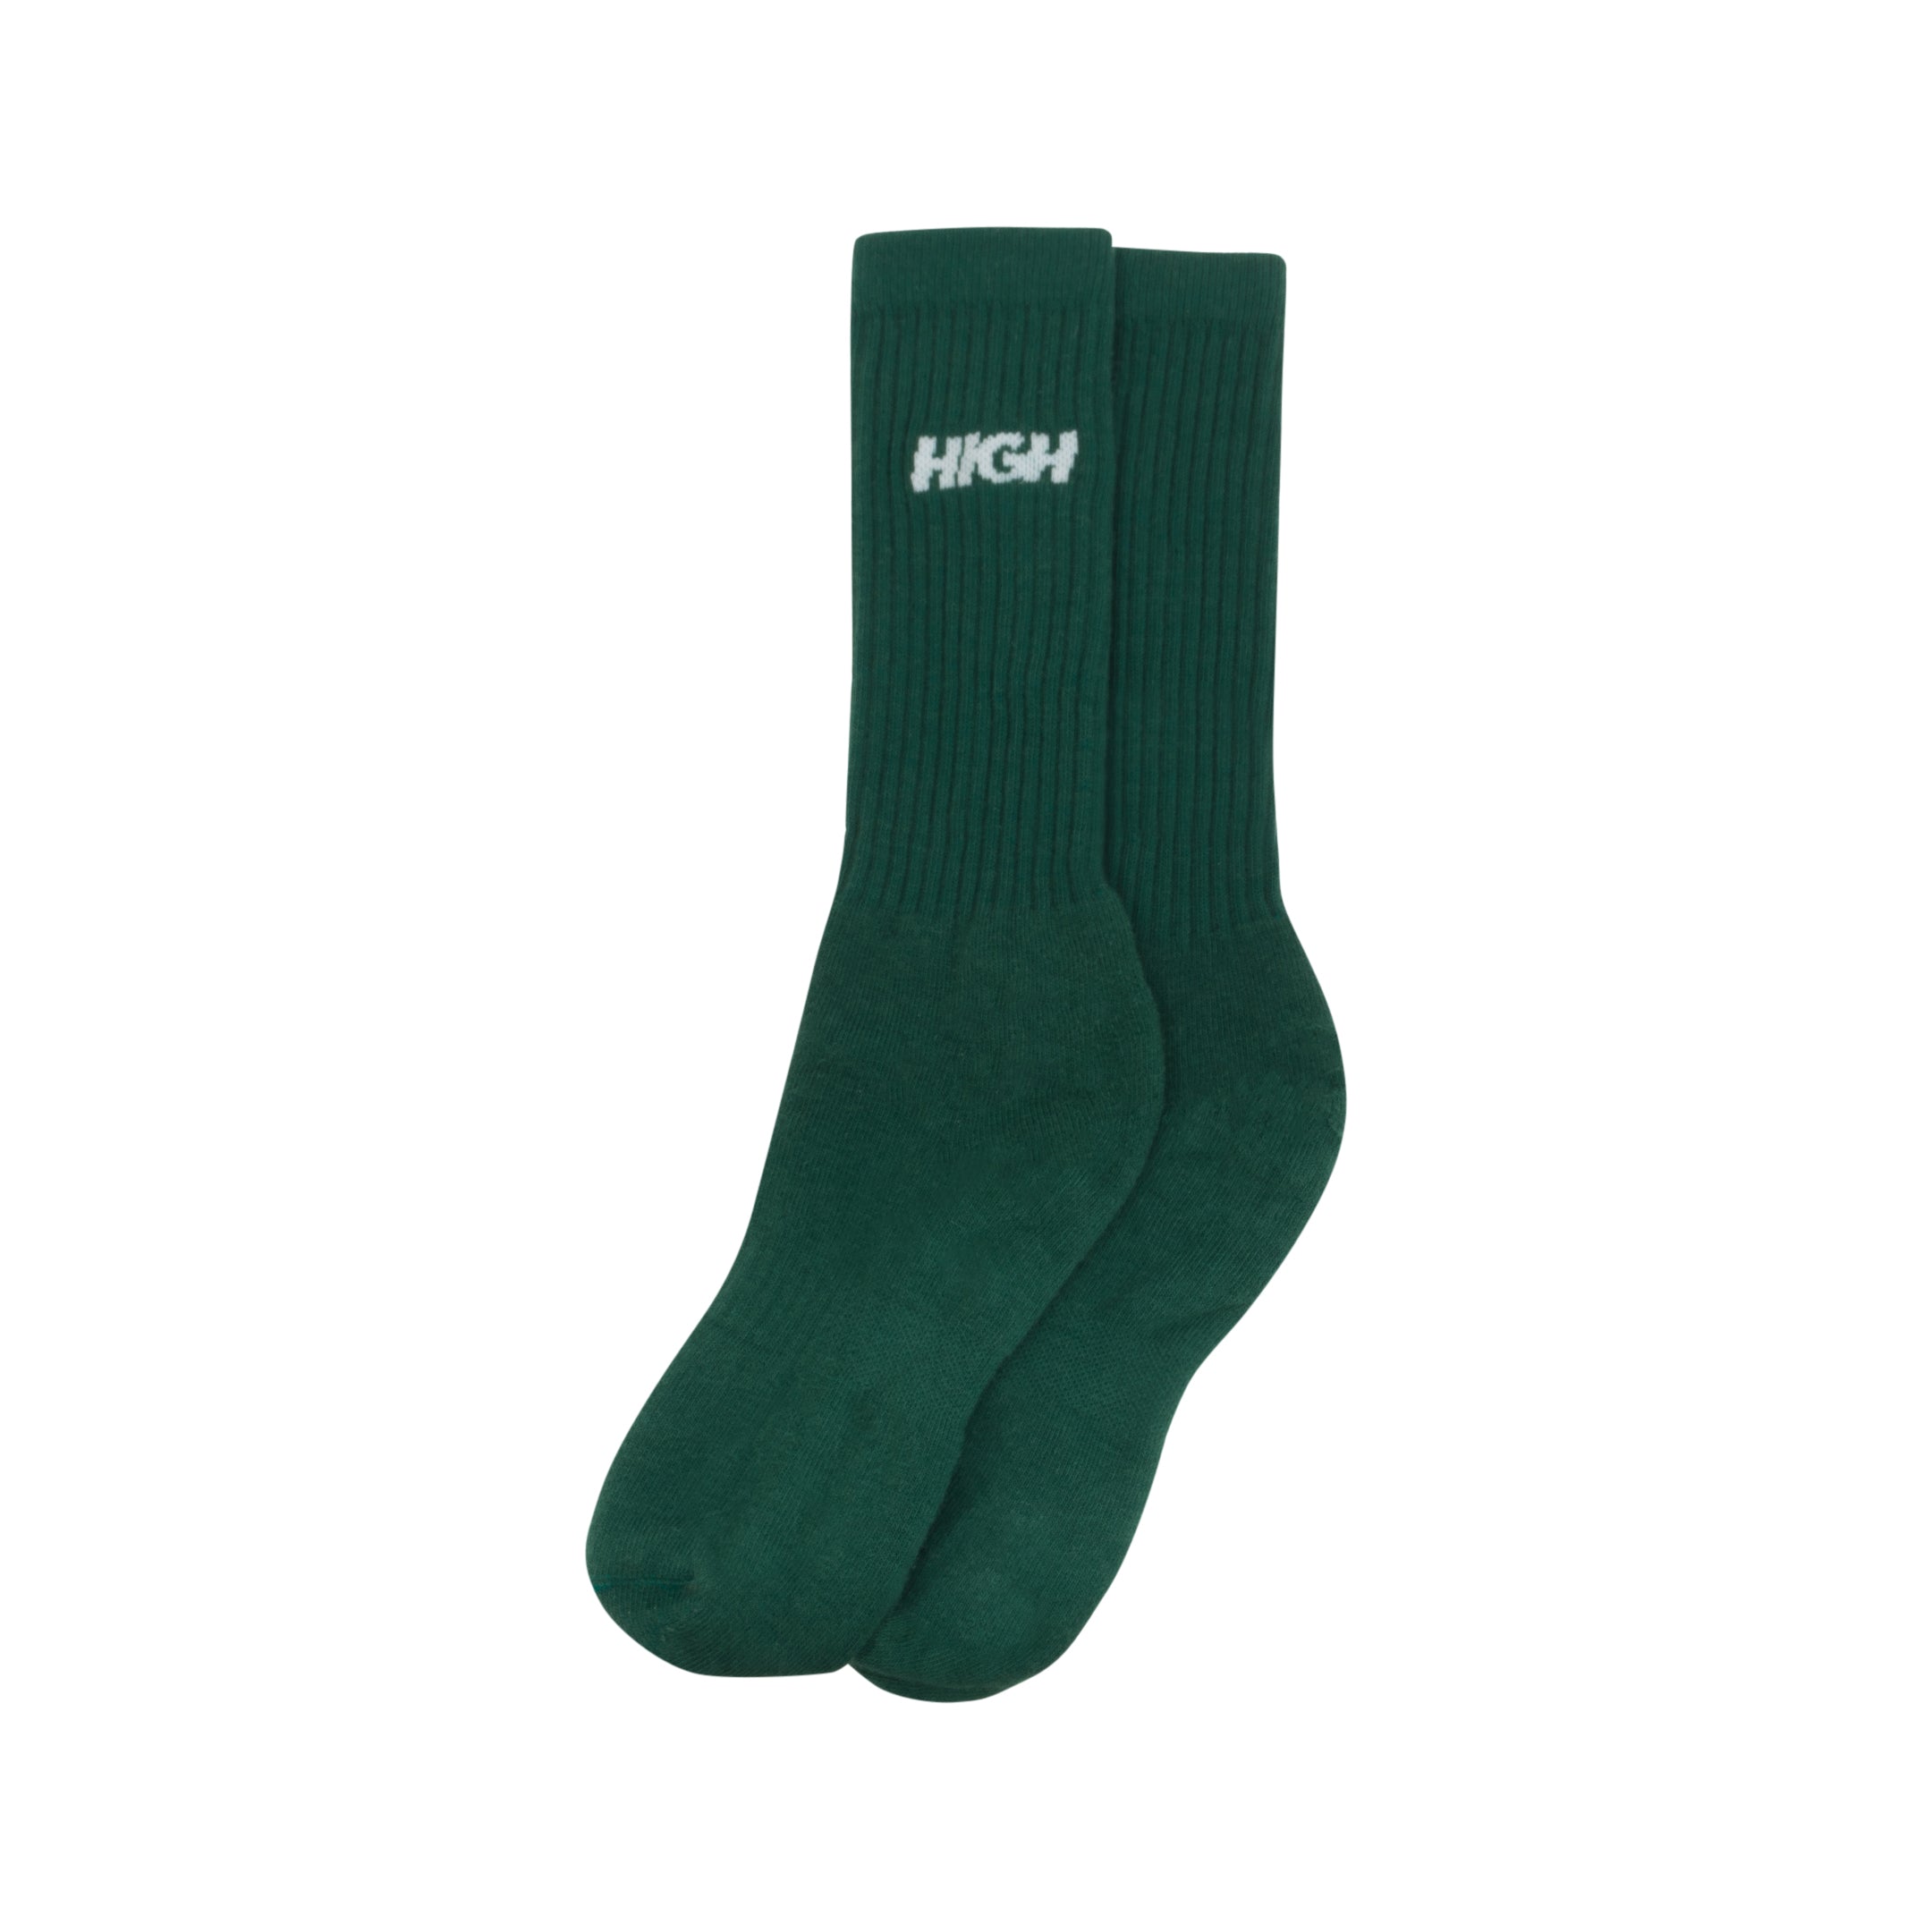 HIGH - Socks Logo Green